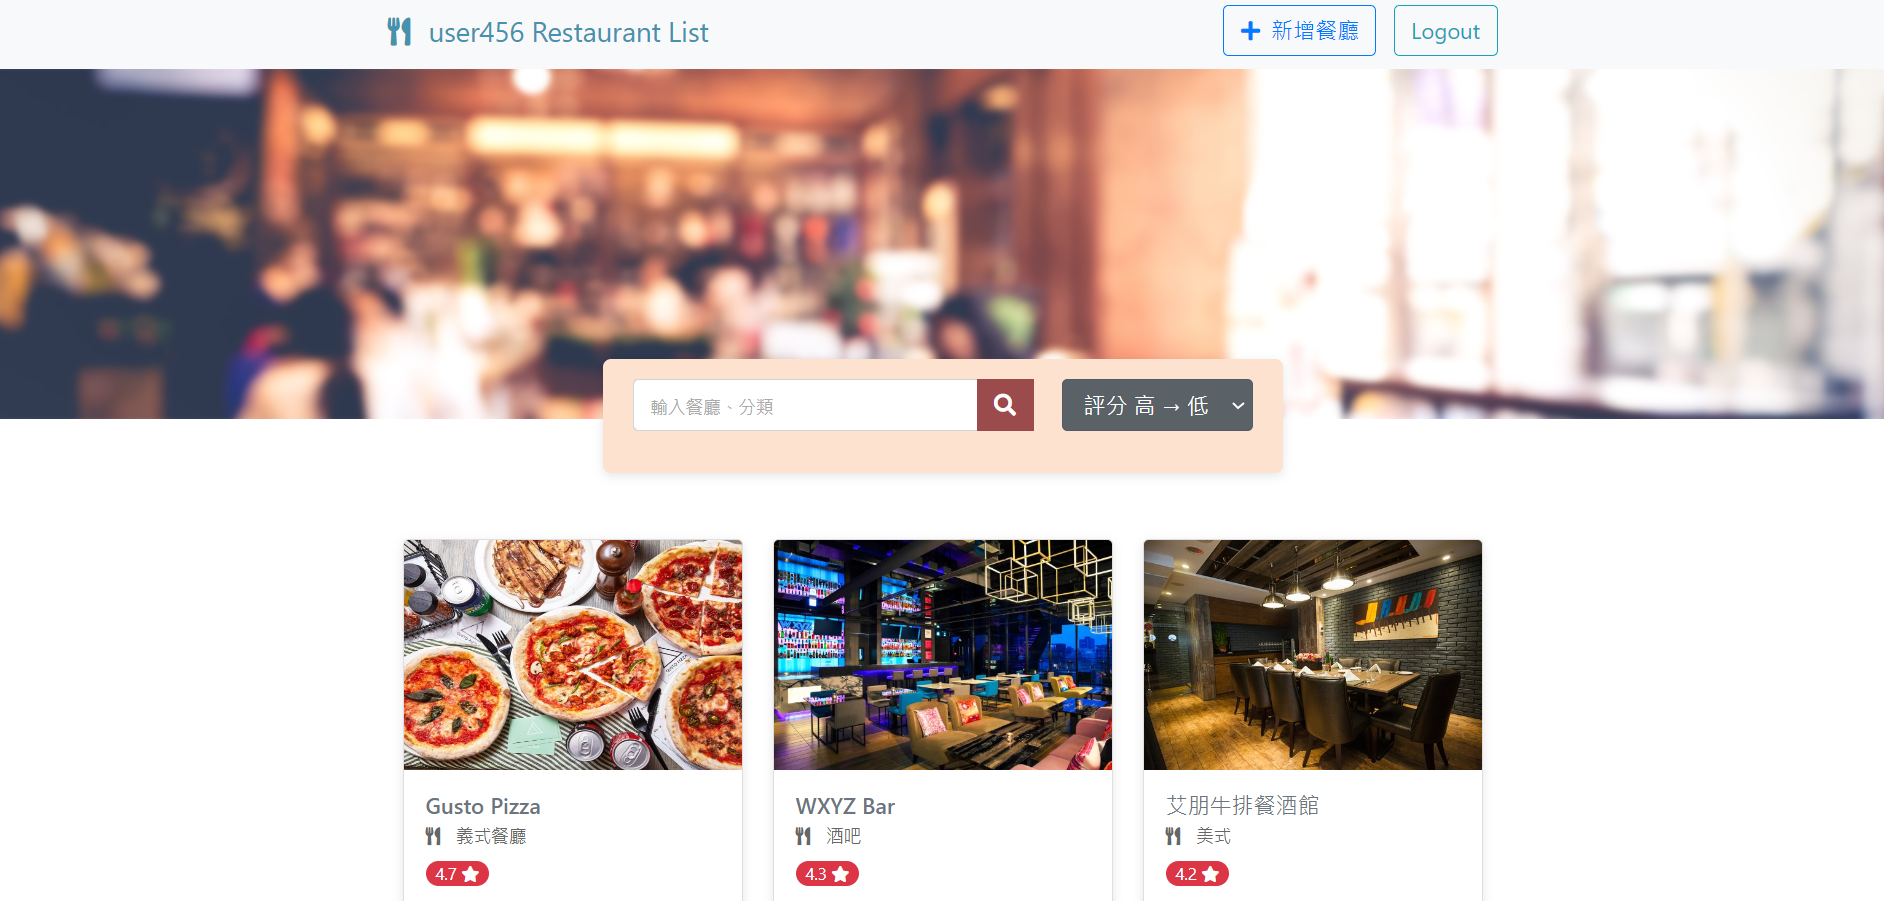 Index page about Restaurant List